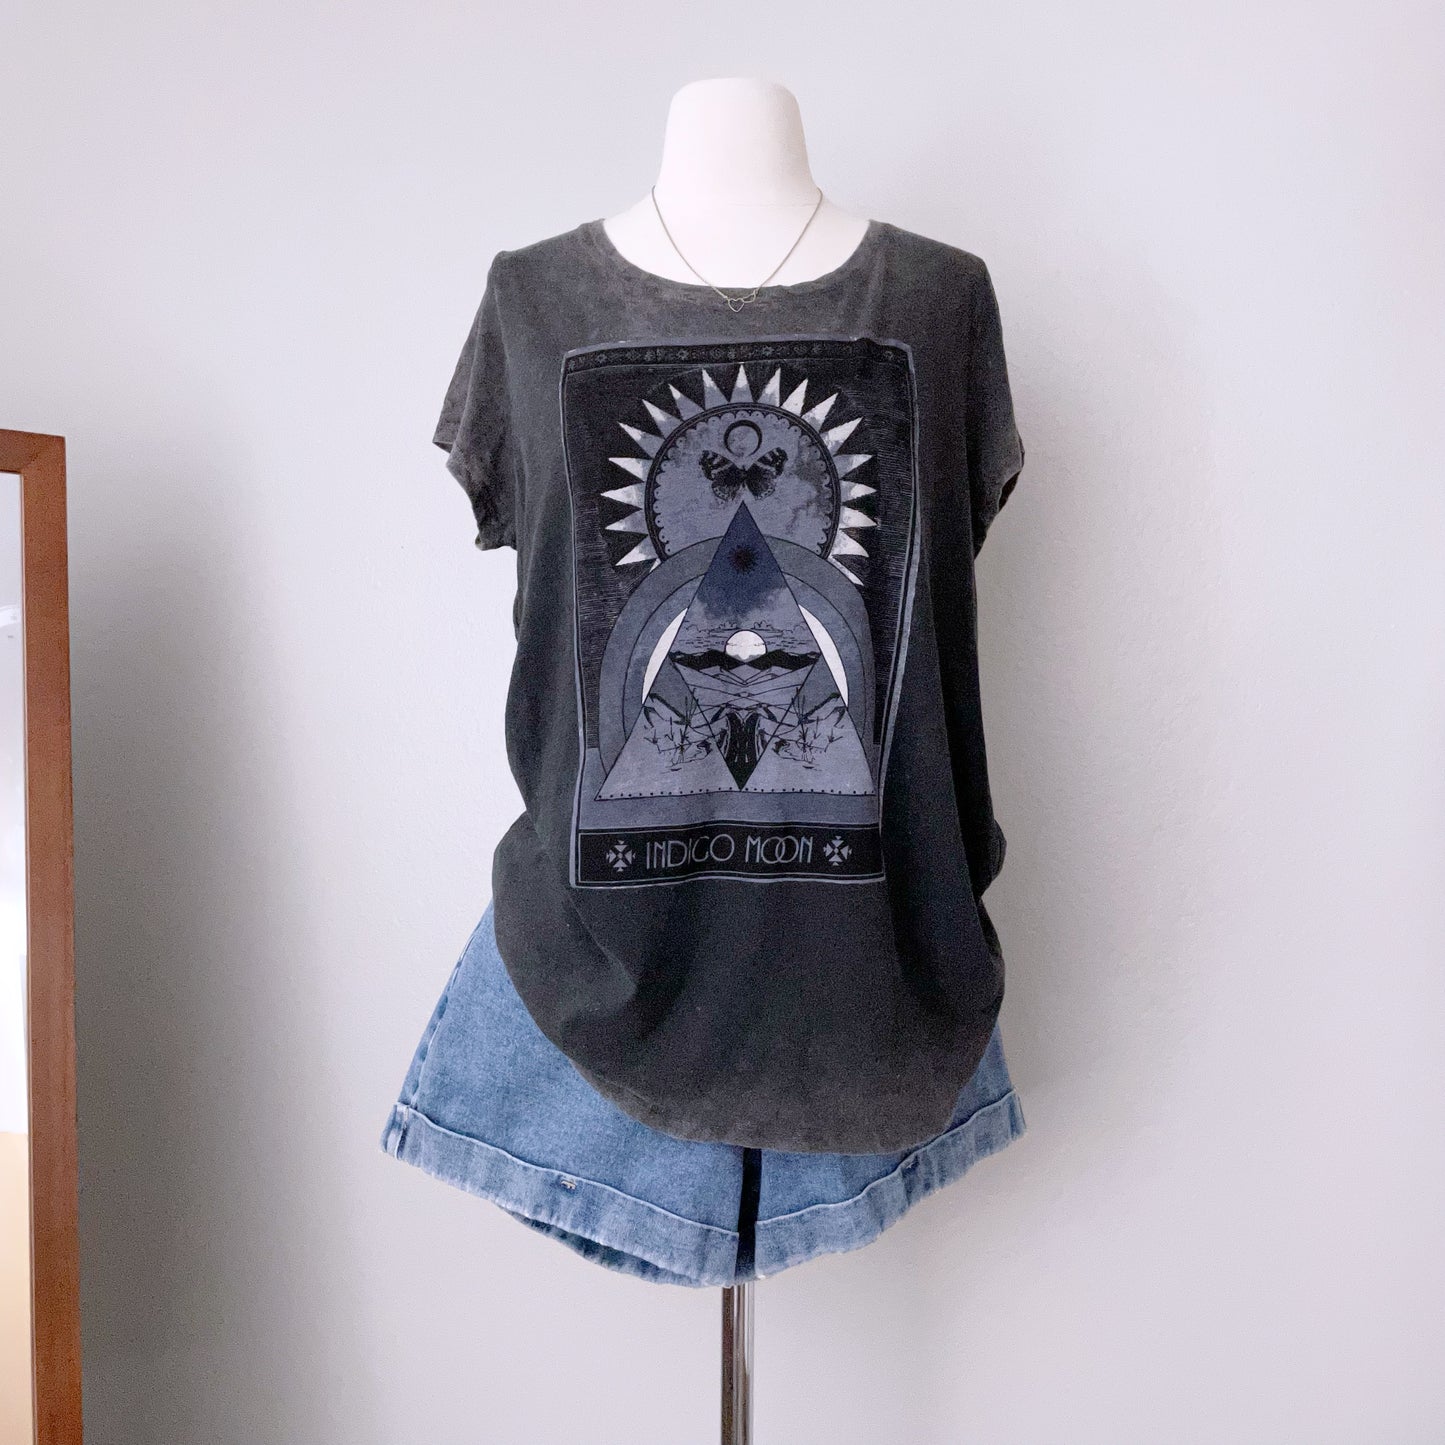 Stone Wash Grey Indigo Moon Graphic Tee Shirt (L)